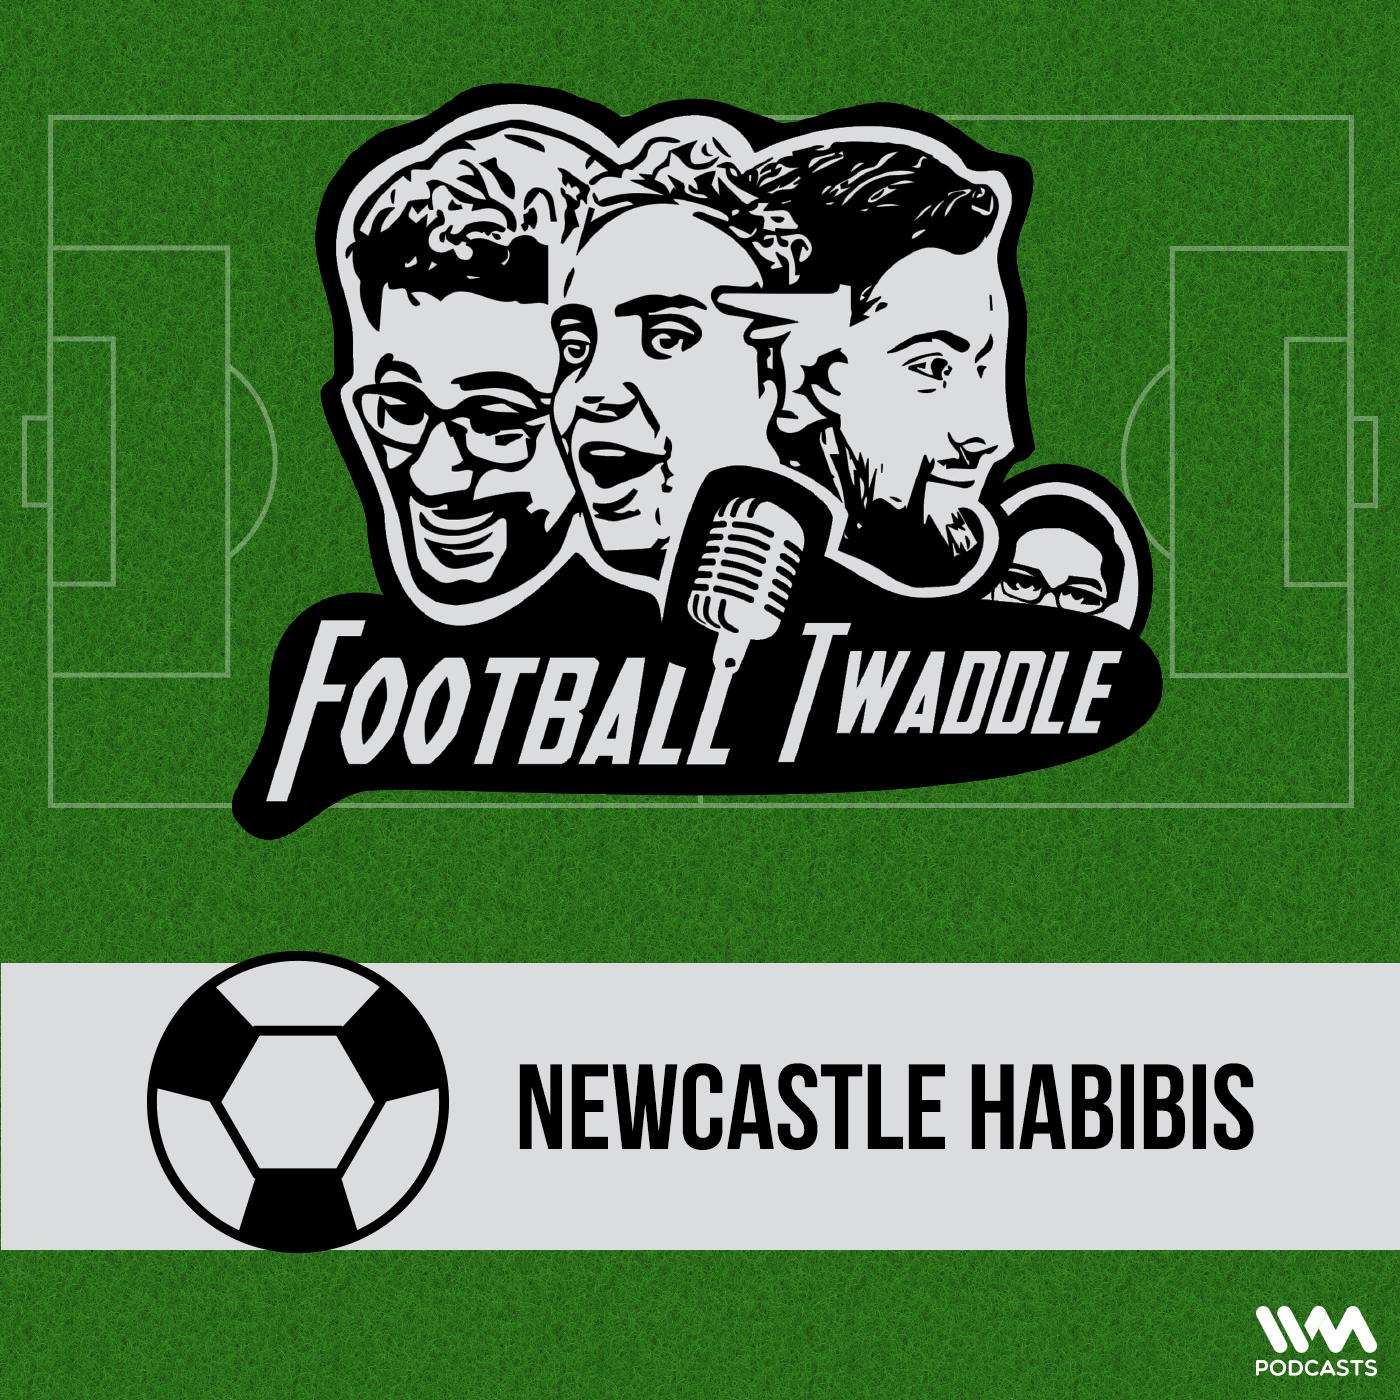 Newcastle Habibis